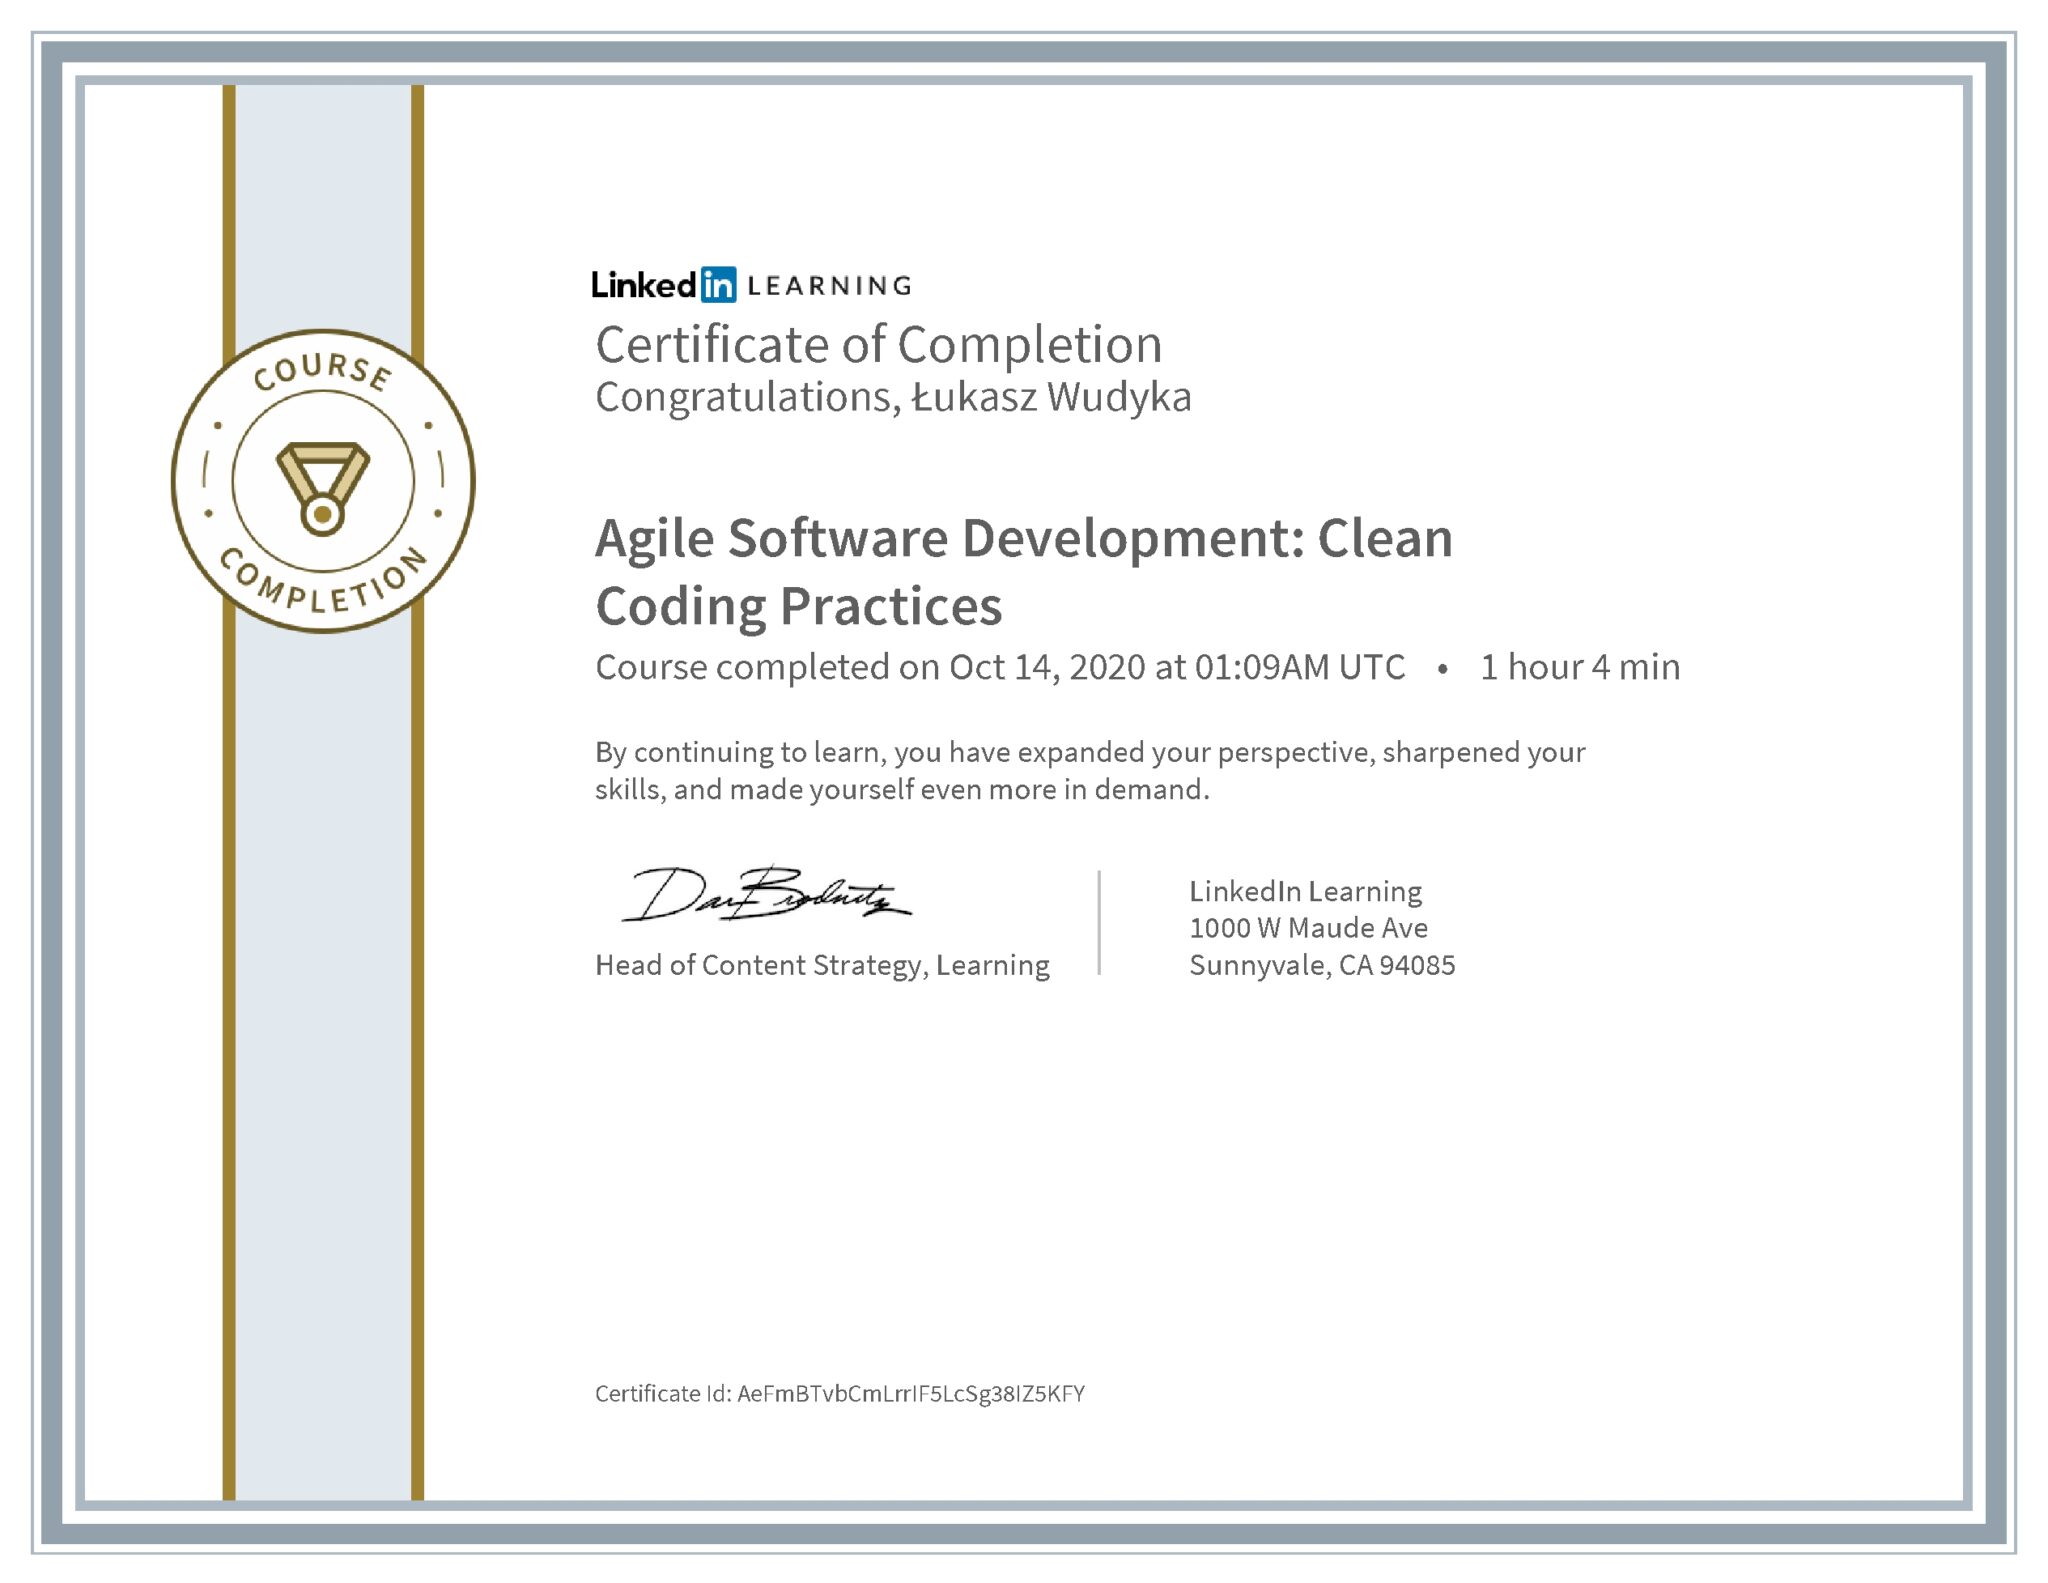 Łukasz Wudyka certyfikat LinkedIn Agile Software Development: Clean Coding Practices